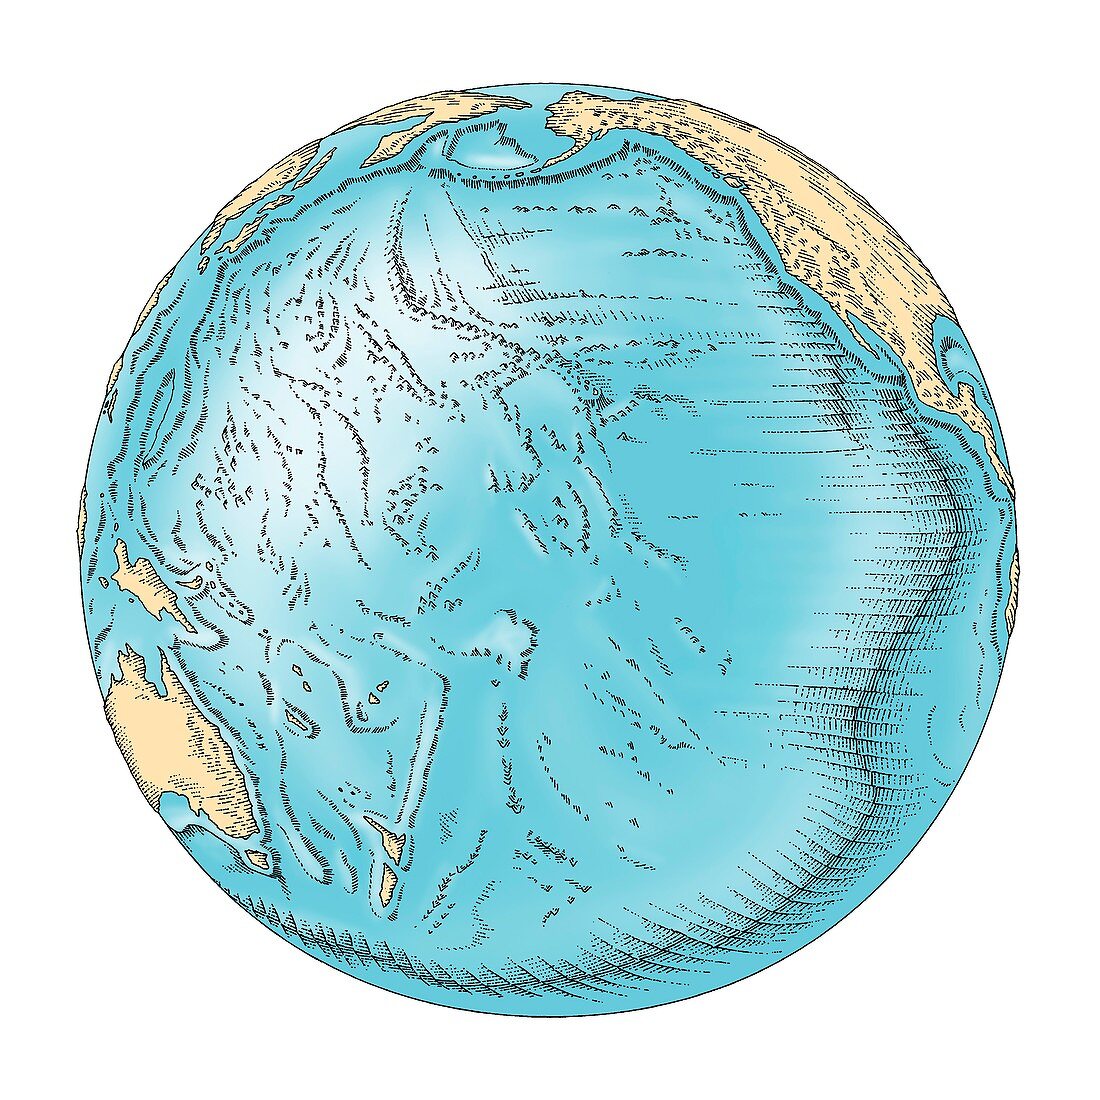 Pacific Ocean sea floor topography